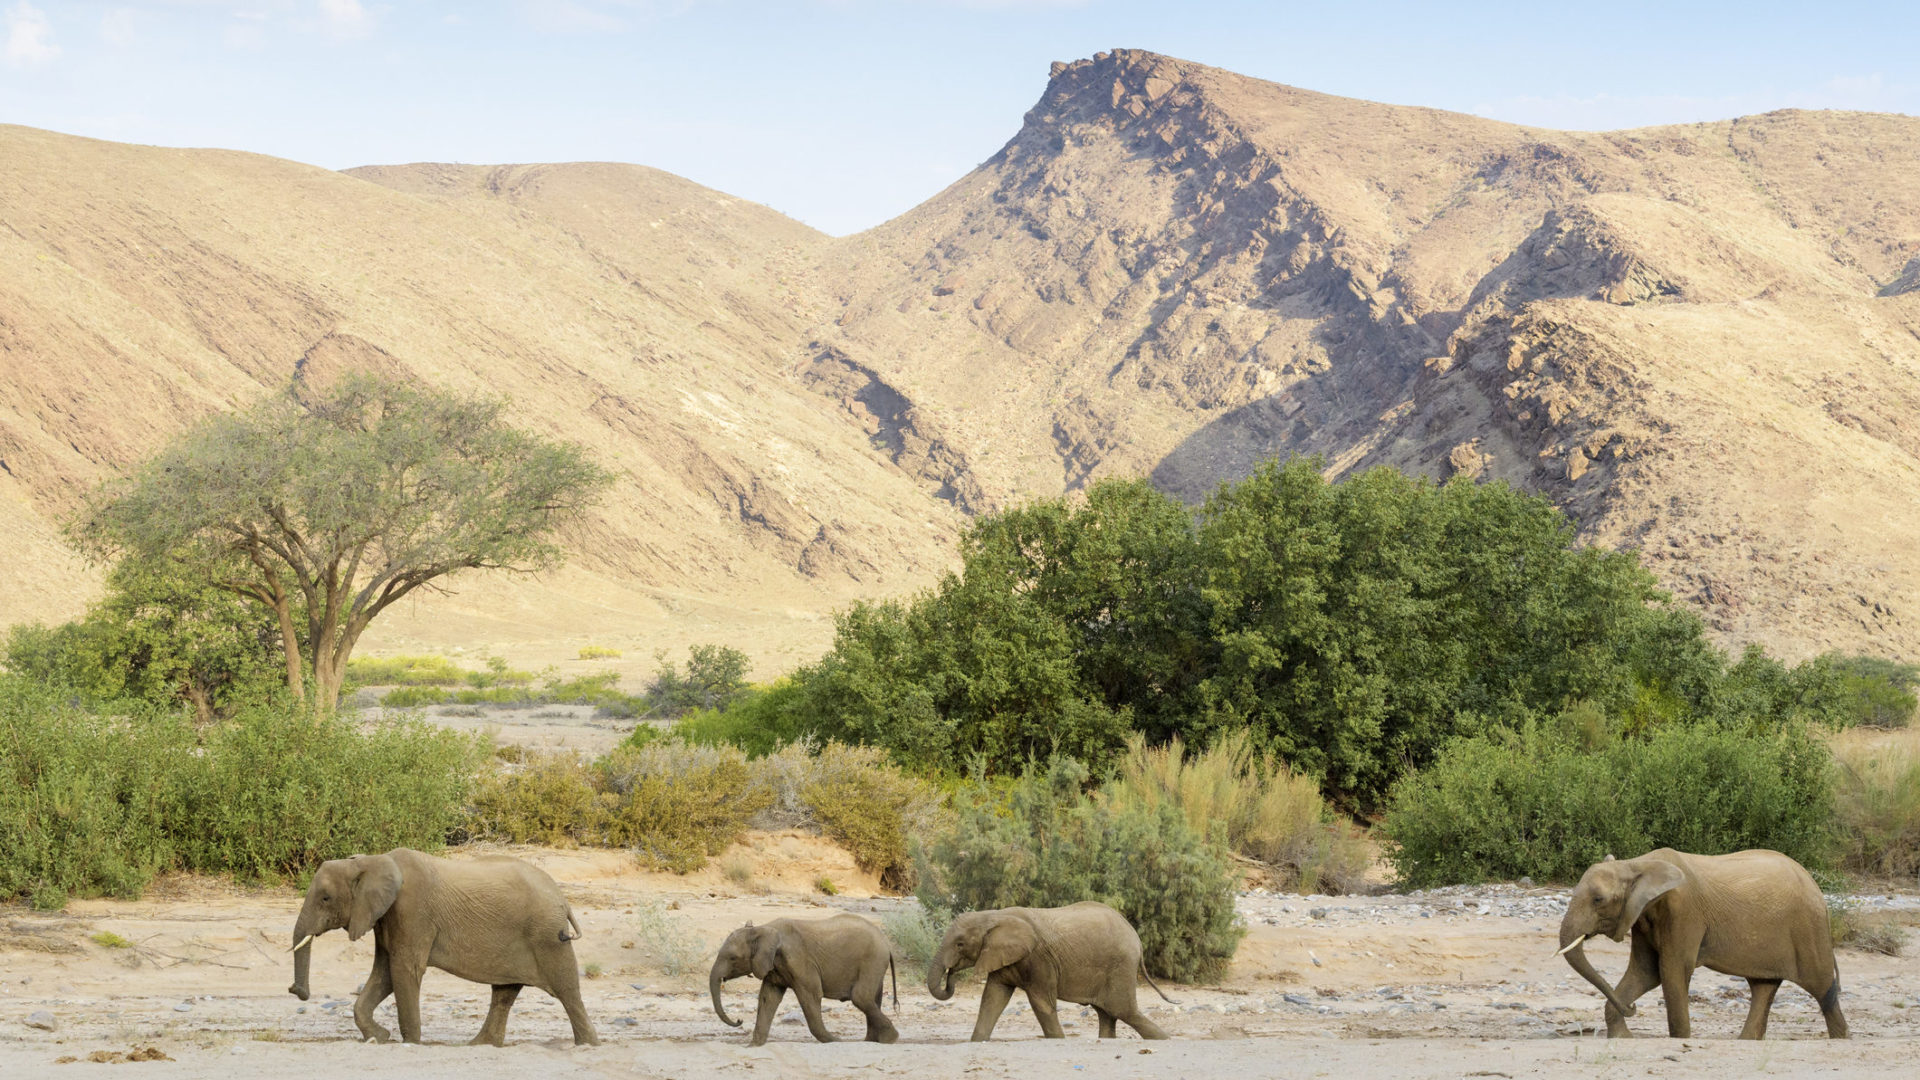 Desert adapted elephants in Damaraland, Namibia